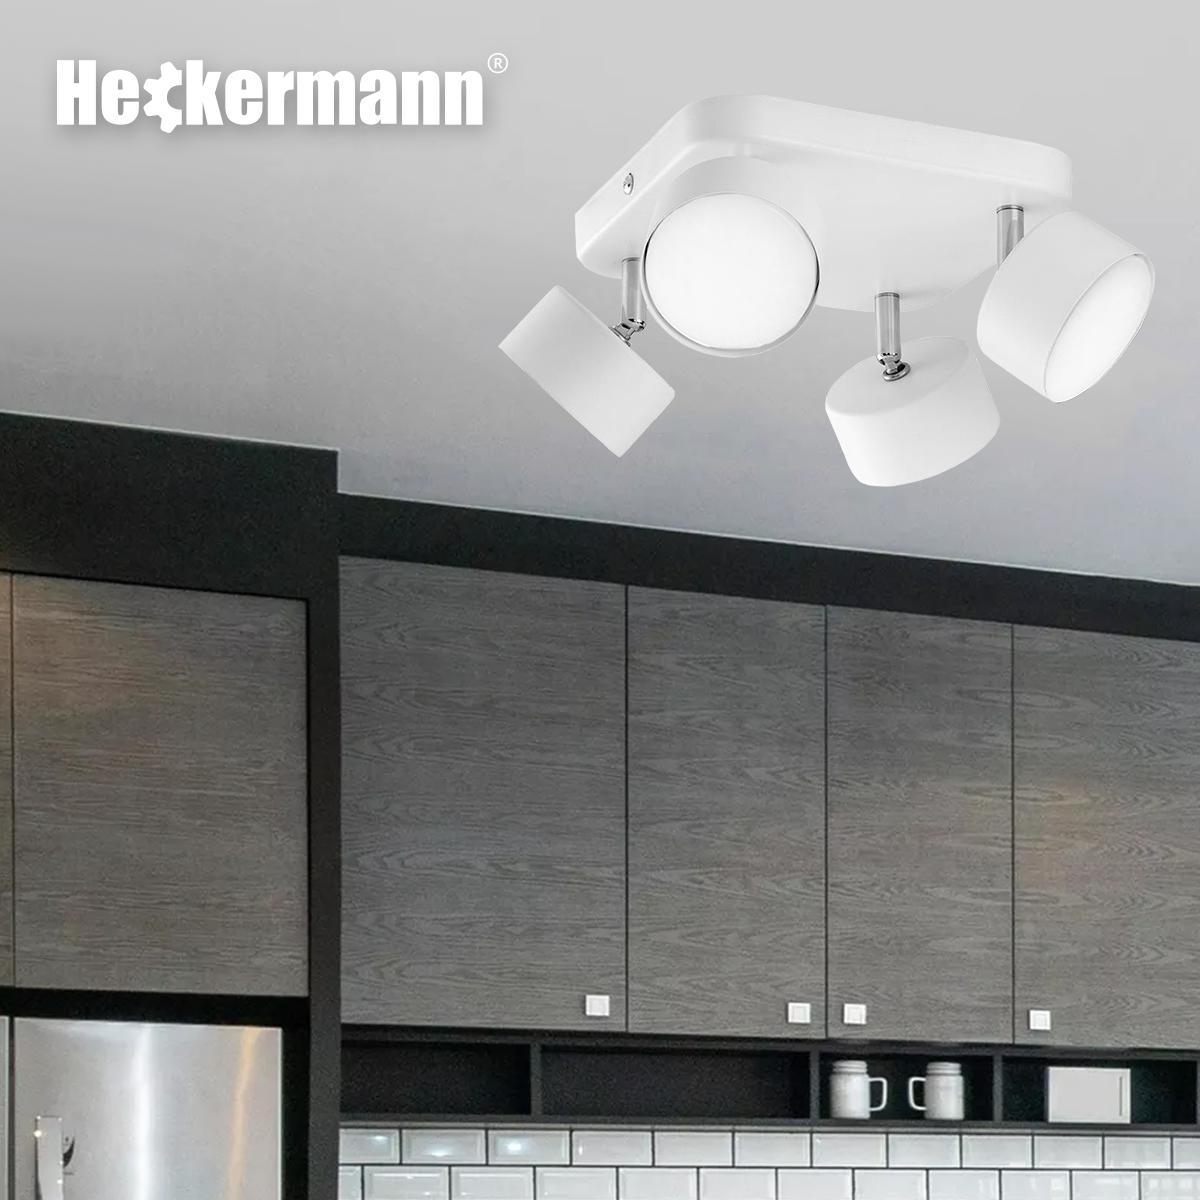 Lampa sufitowa punktowa LED Heckermann 8795318A Biała 4x głowica 4 Full Screen